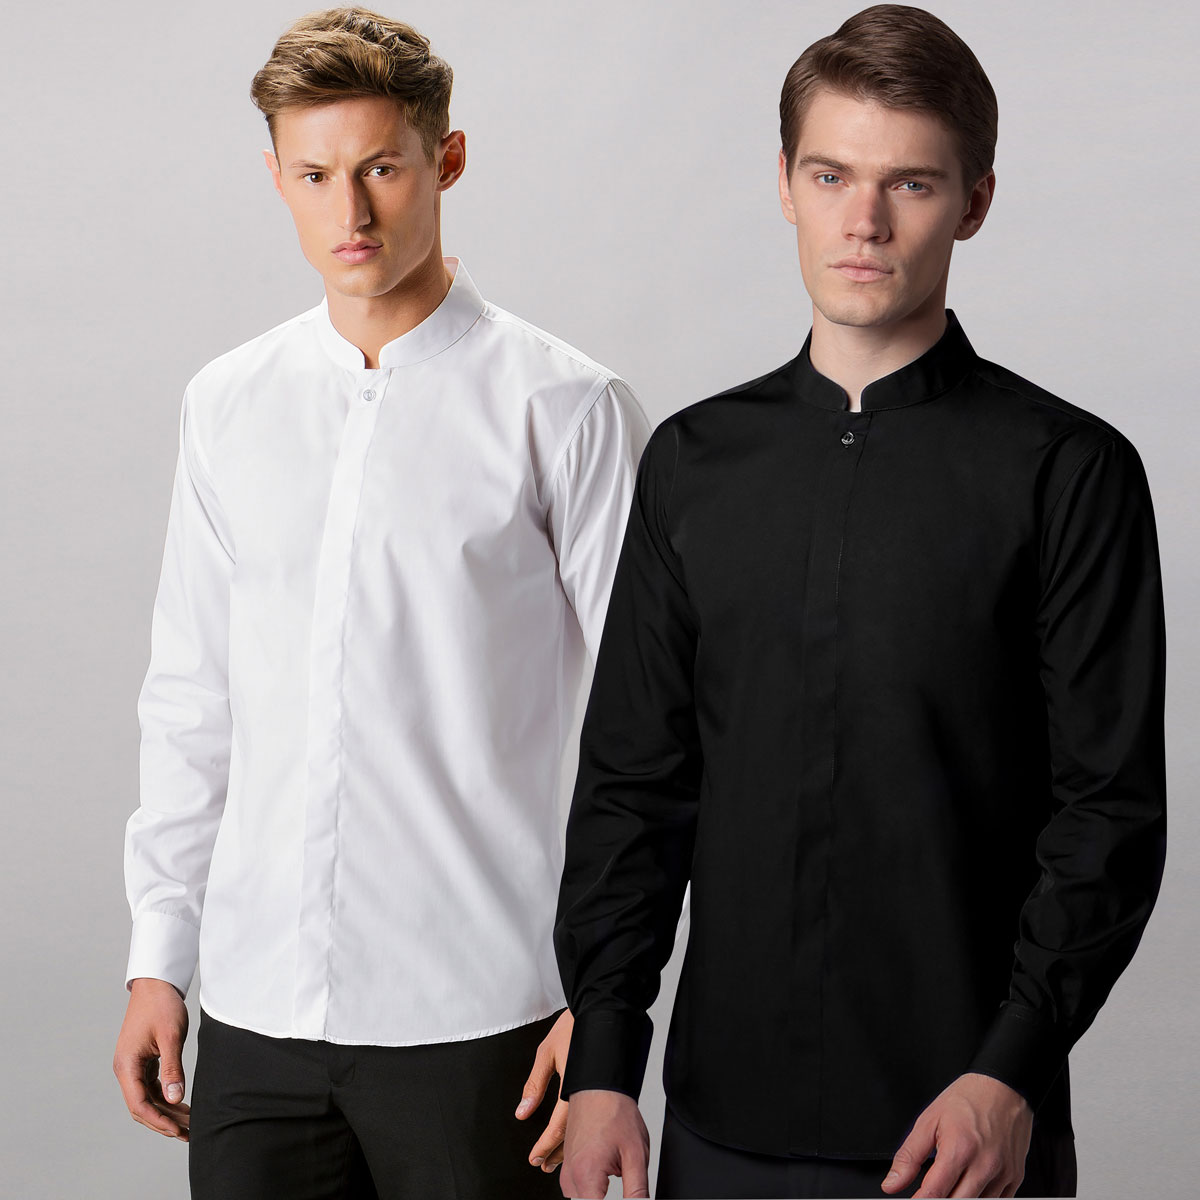 Mandarin Collar Shirt Long Sleeve - KK161